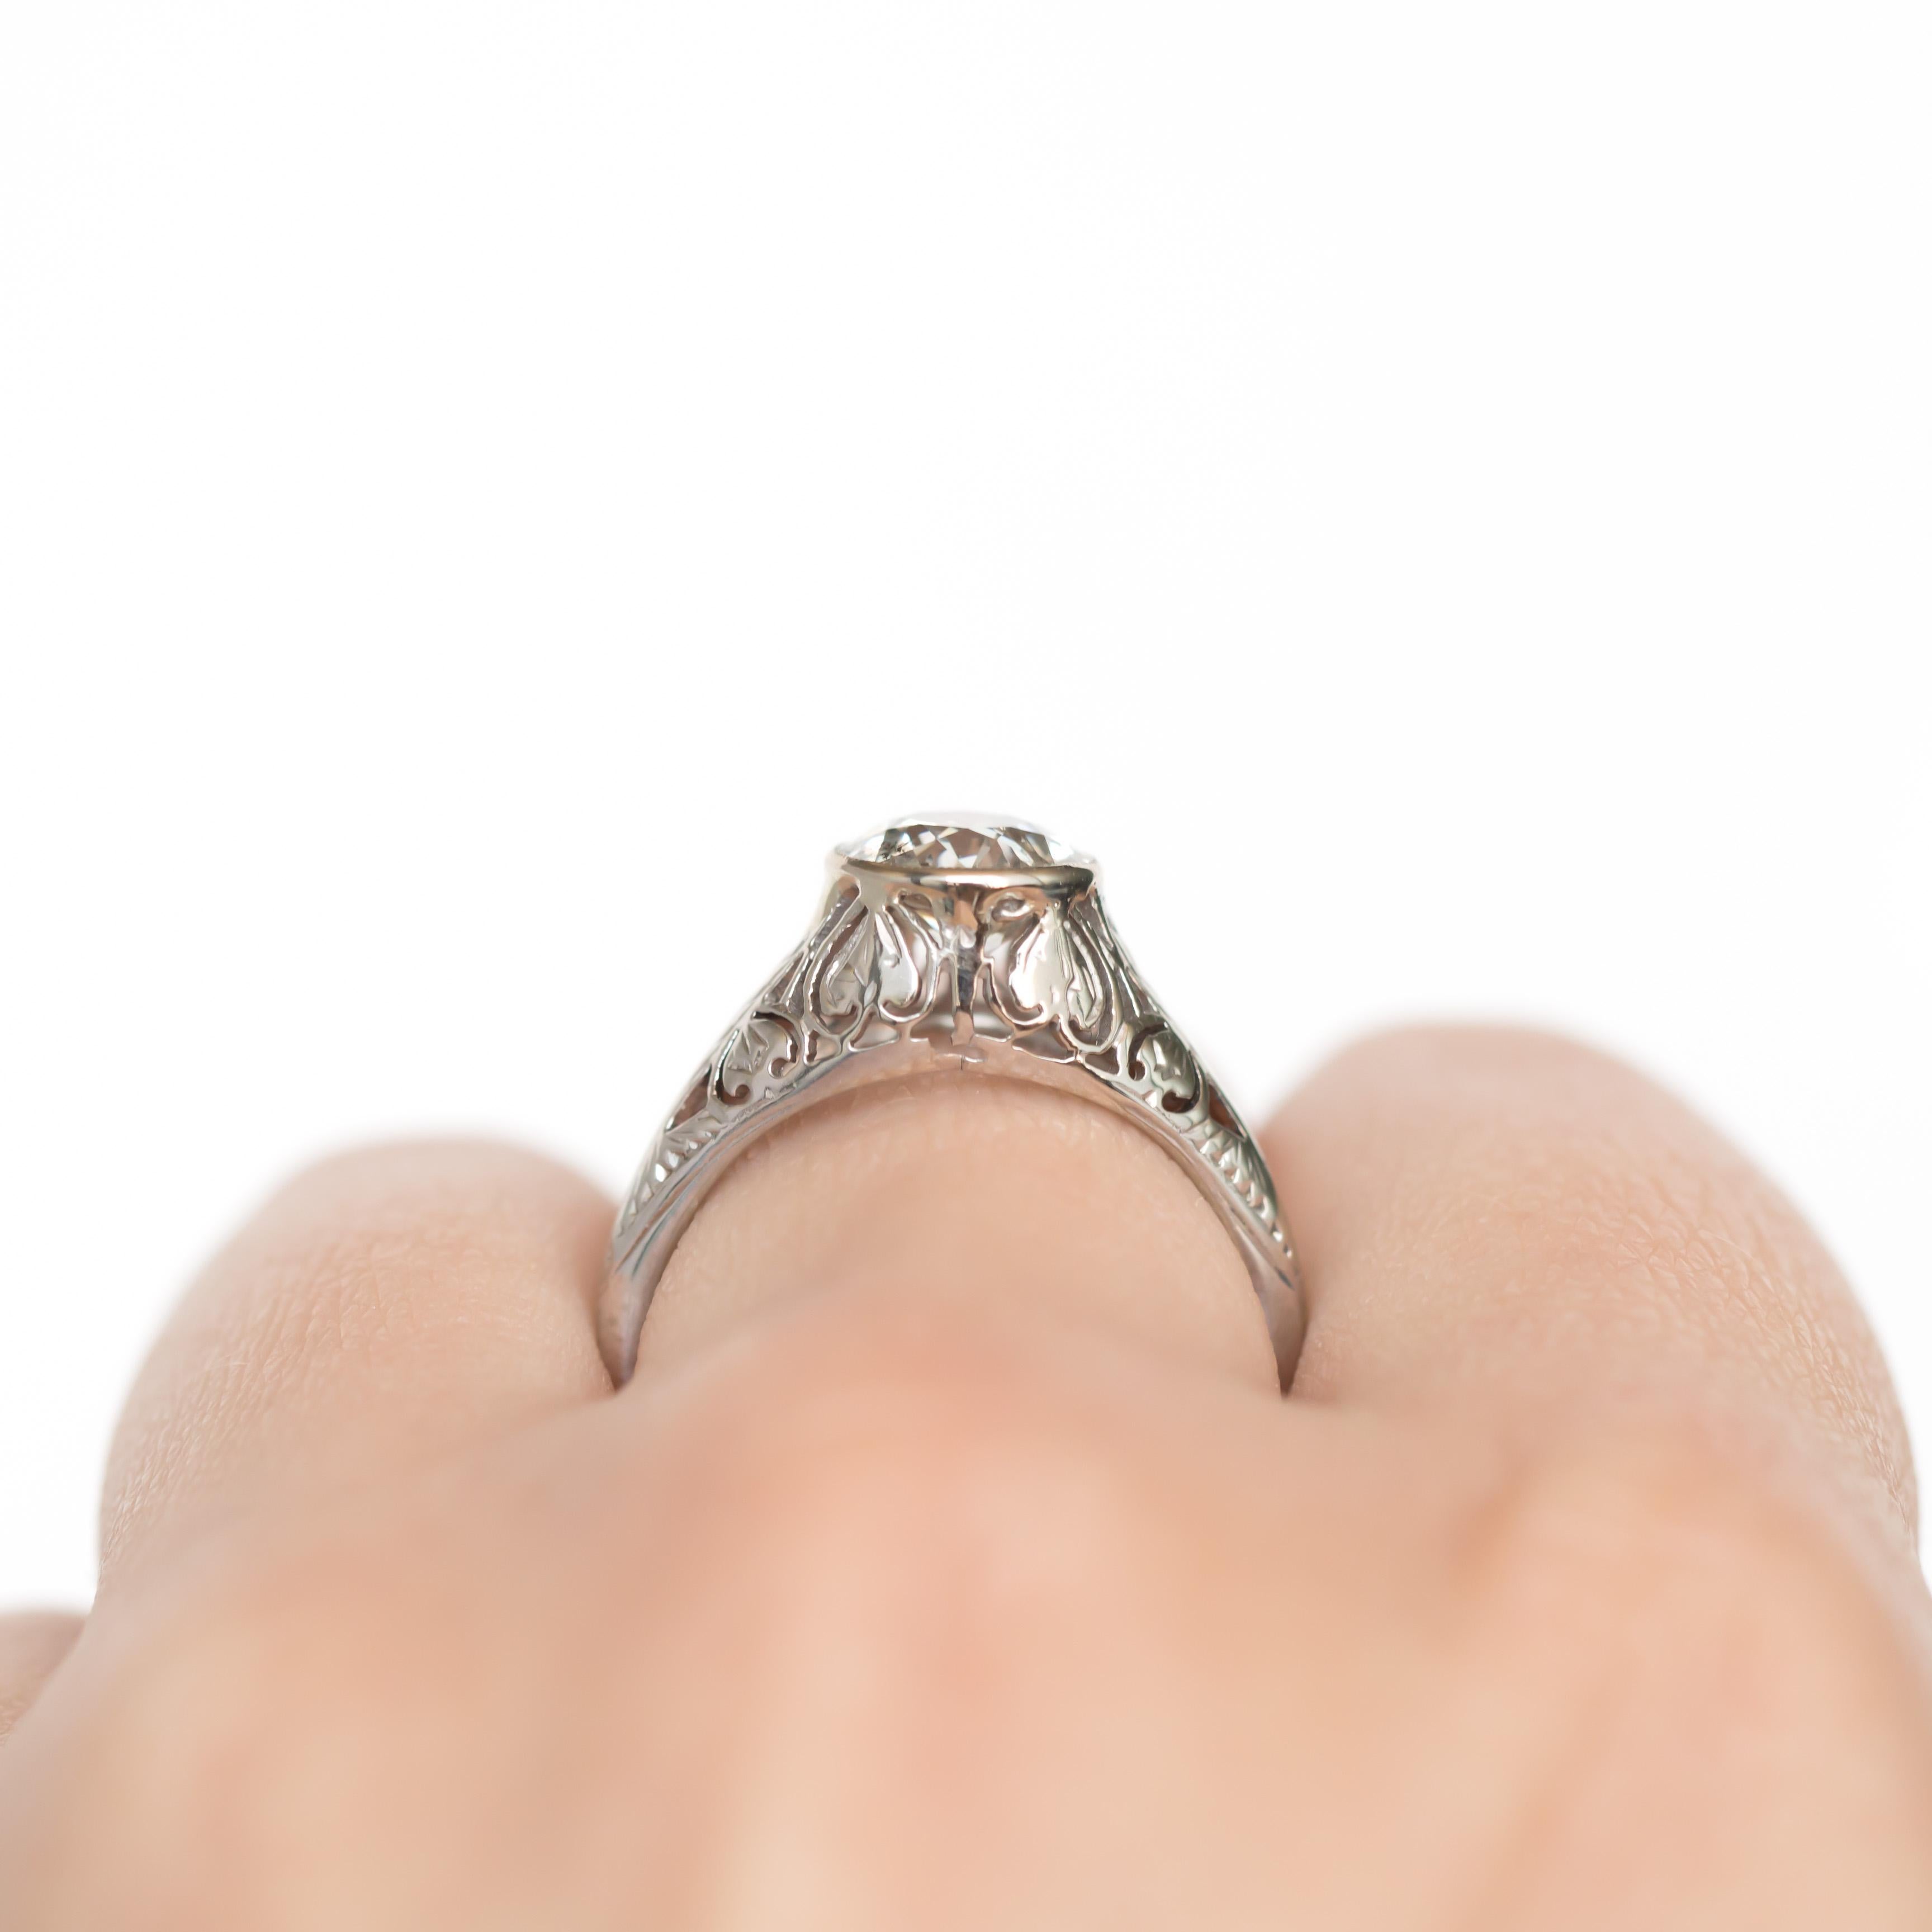 Women's 1.58 Carat Diamond Engagement Ring For Sale